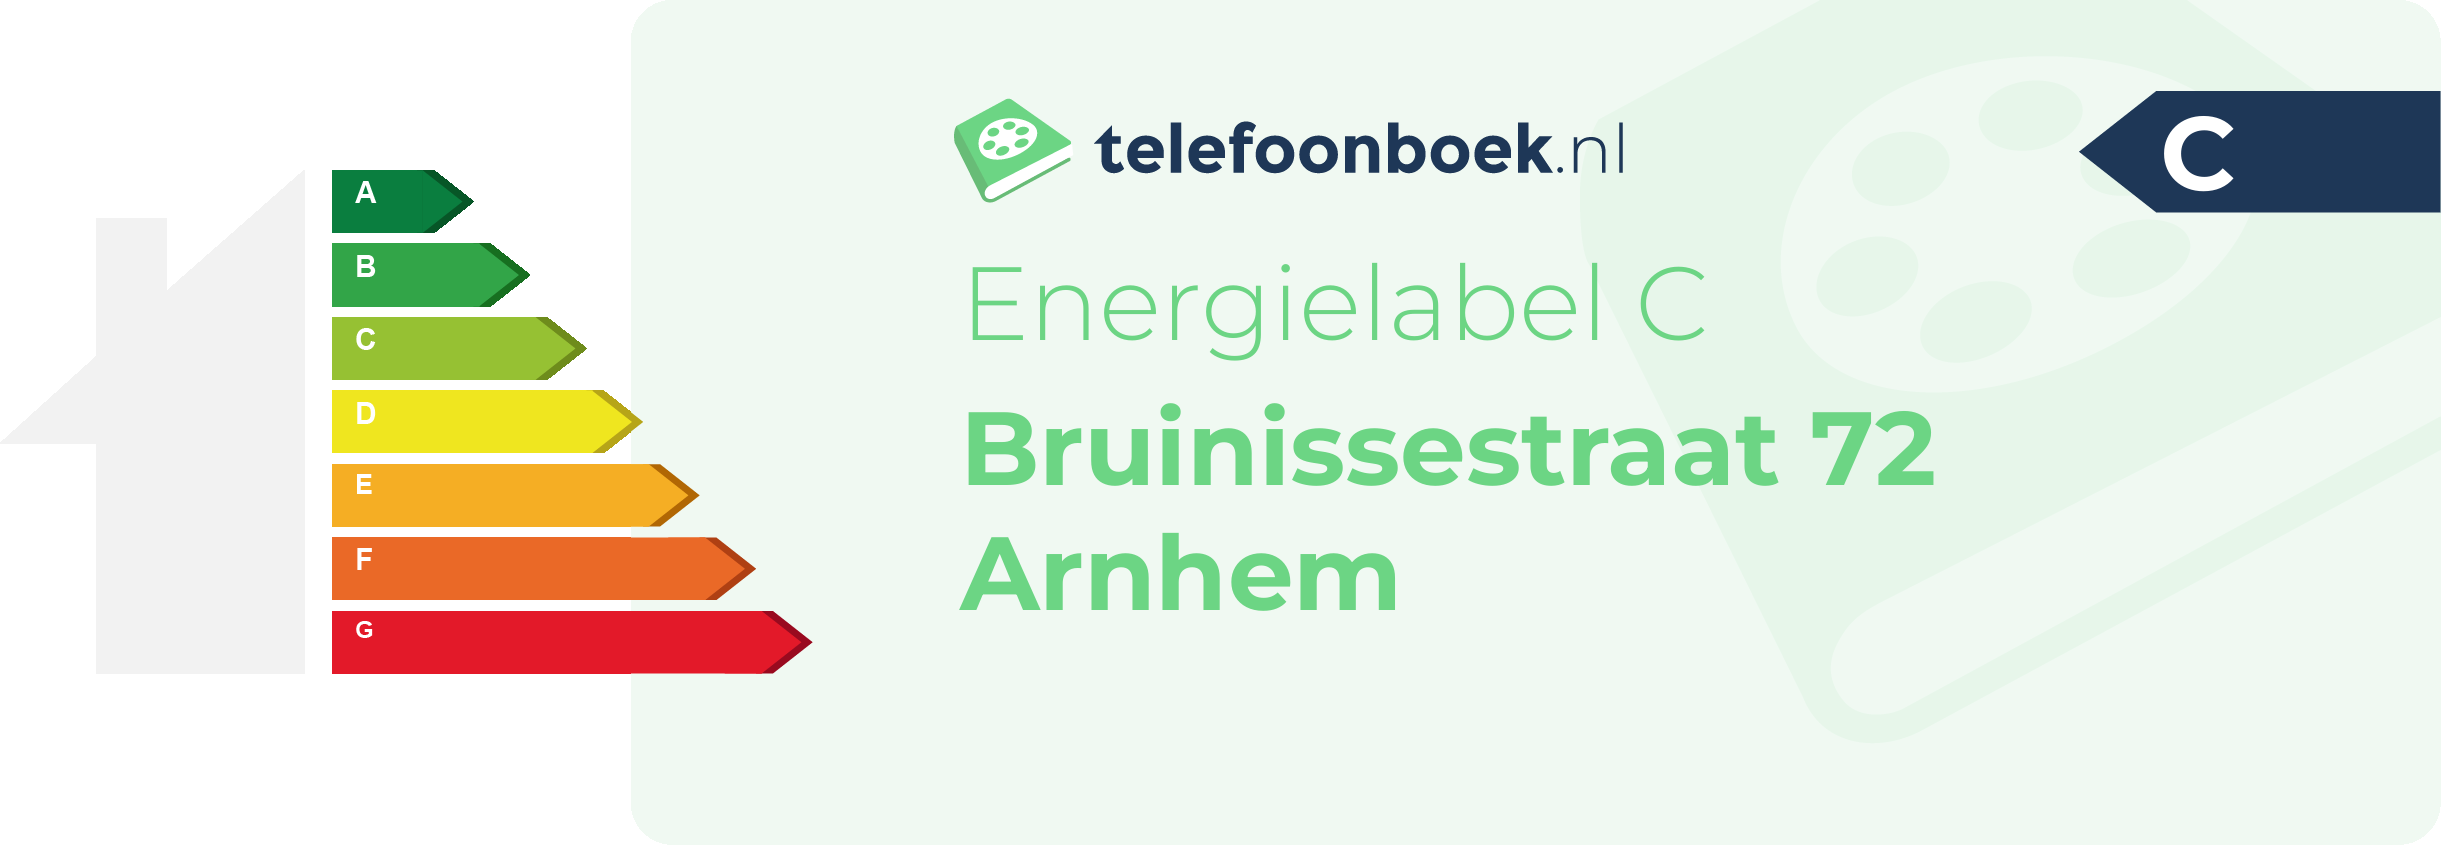 Energielabel Bruinissestraat 72 Arnhem